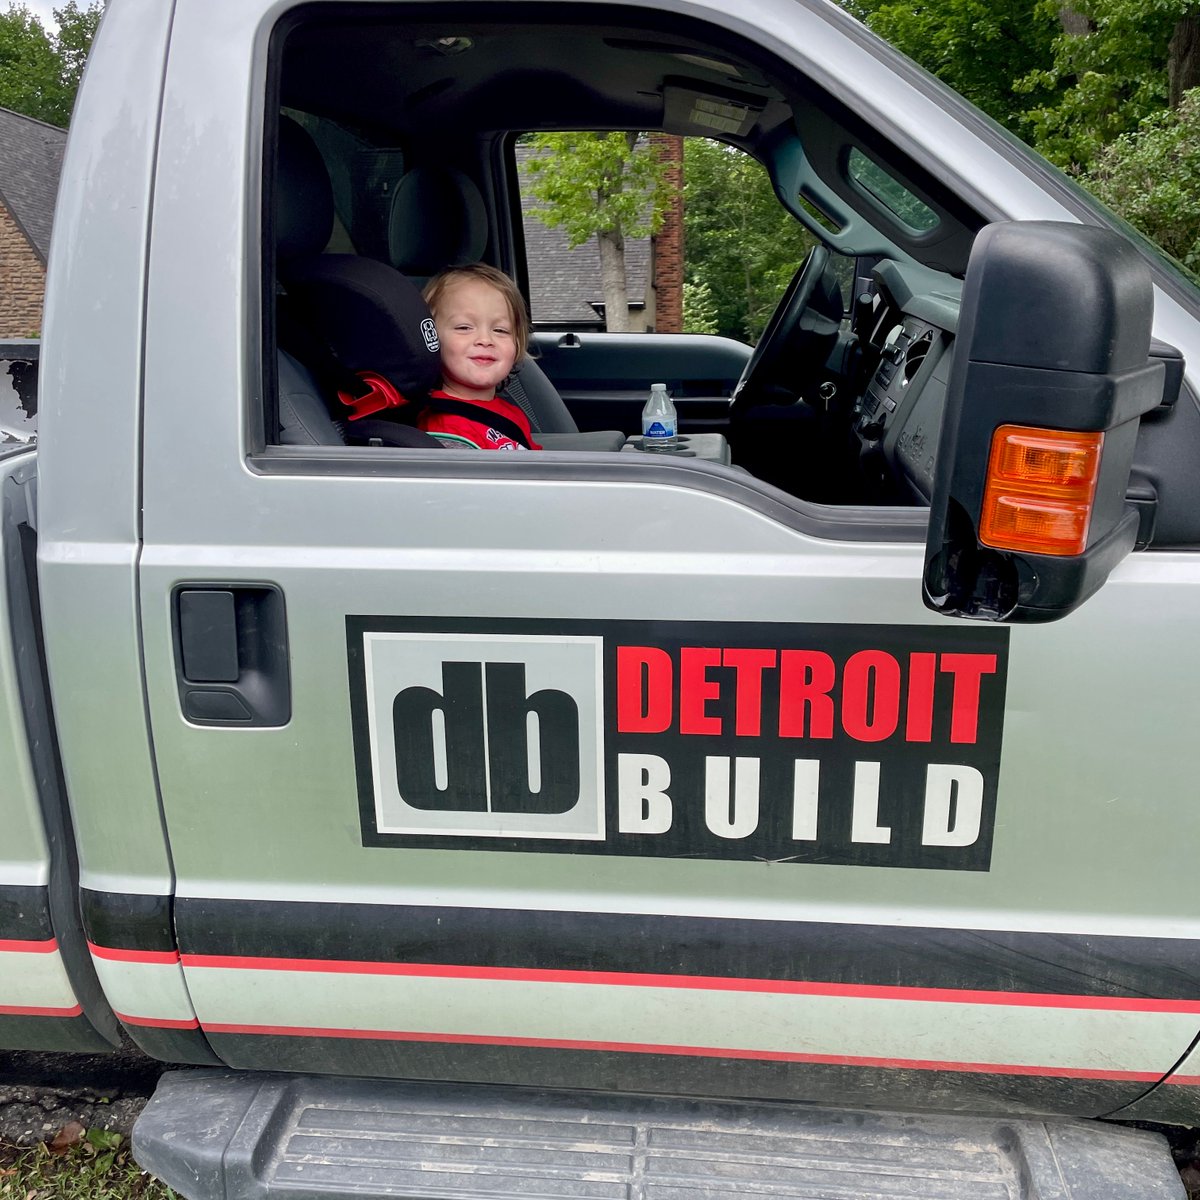 What kid doesn’t love to drive in daddy‘s work truck? 🚚 

#bringyourkidtowork #bringyoursontowork #bringyourkidtoworkday #worktruck #companytruck #detroitbuild #daddystruck